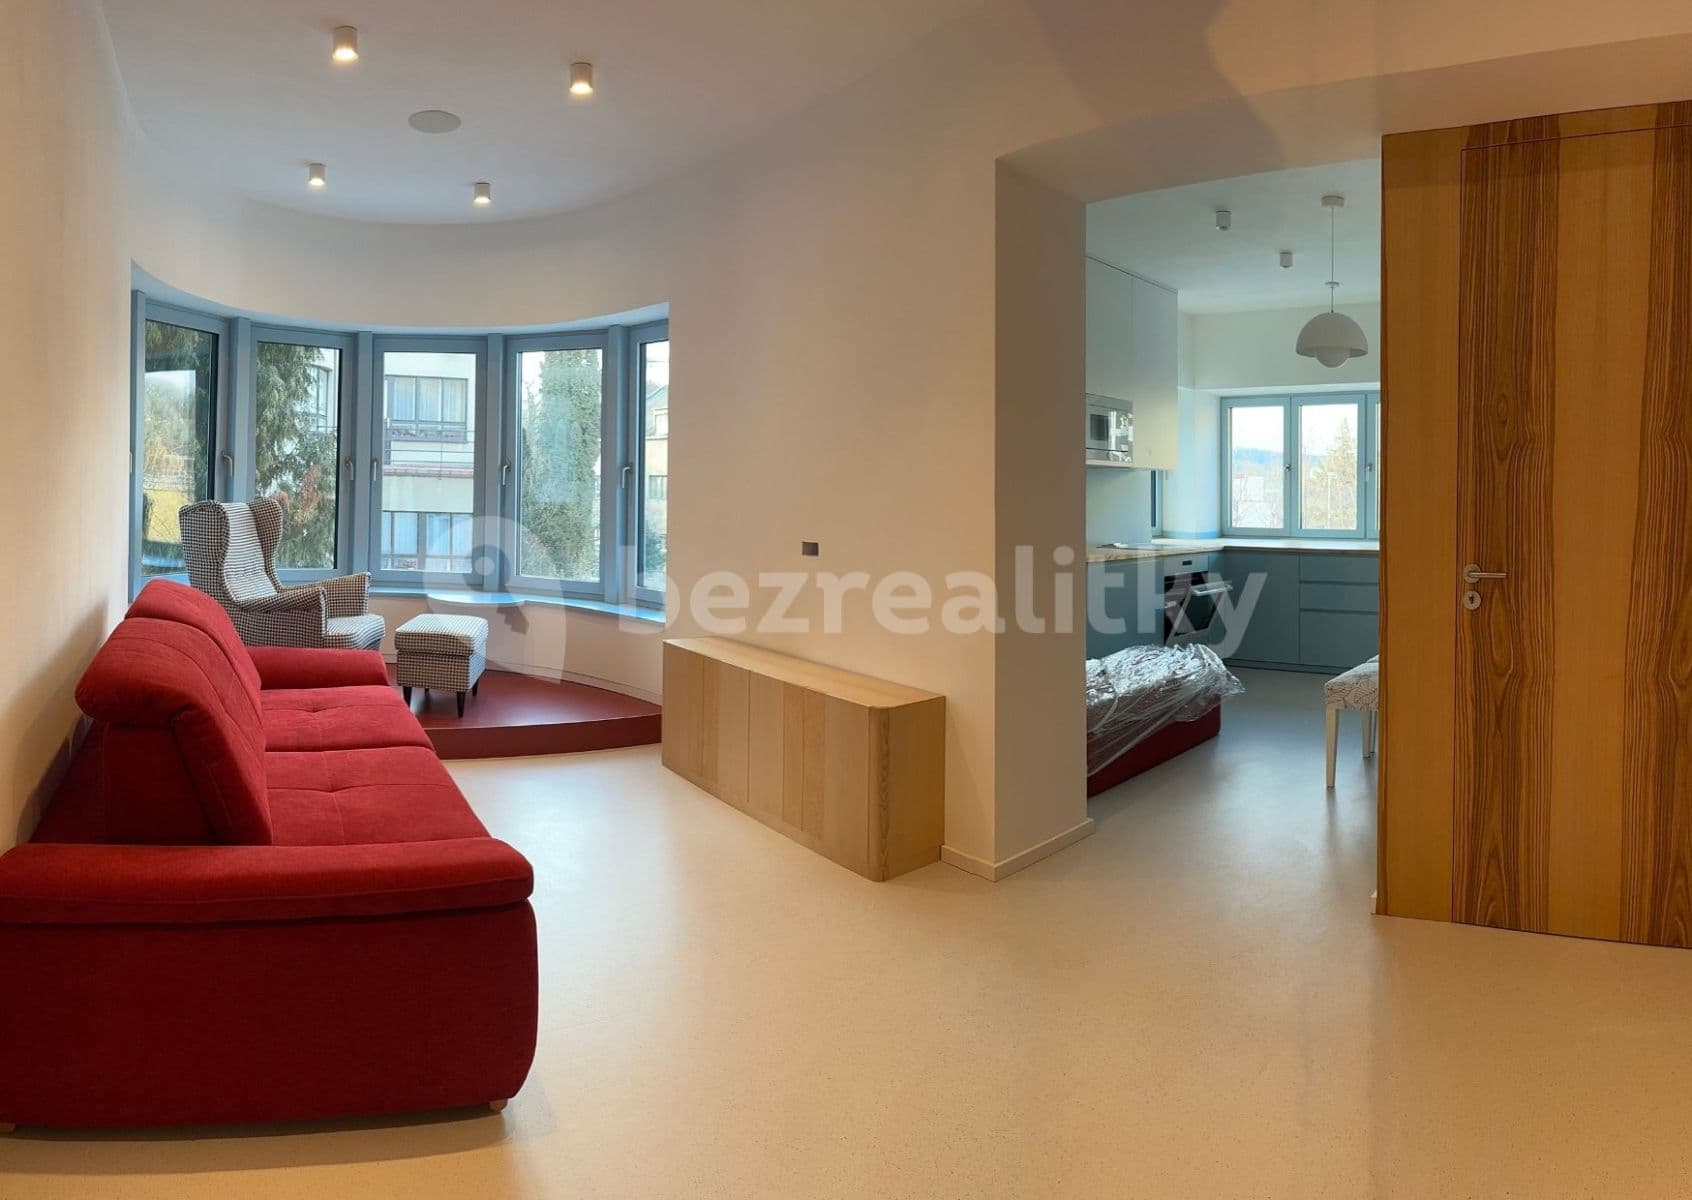 1 bedroom with open-plan kitchen flat to rent, 49 m², Svátkova, Prague, Prague